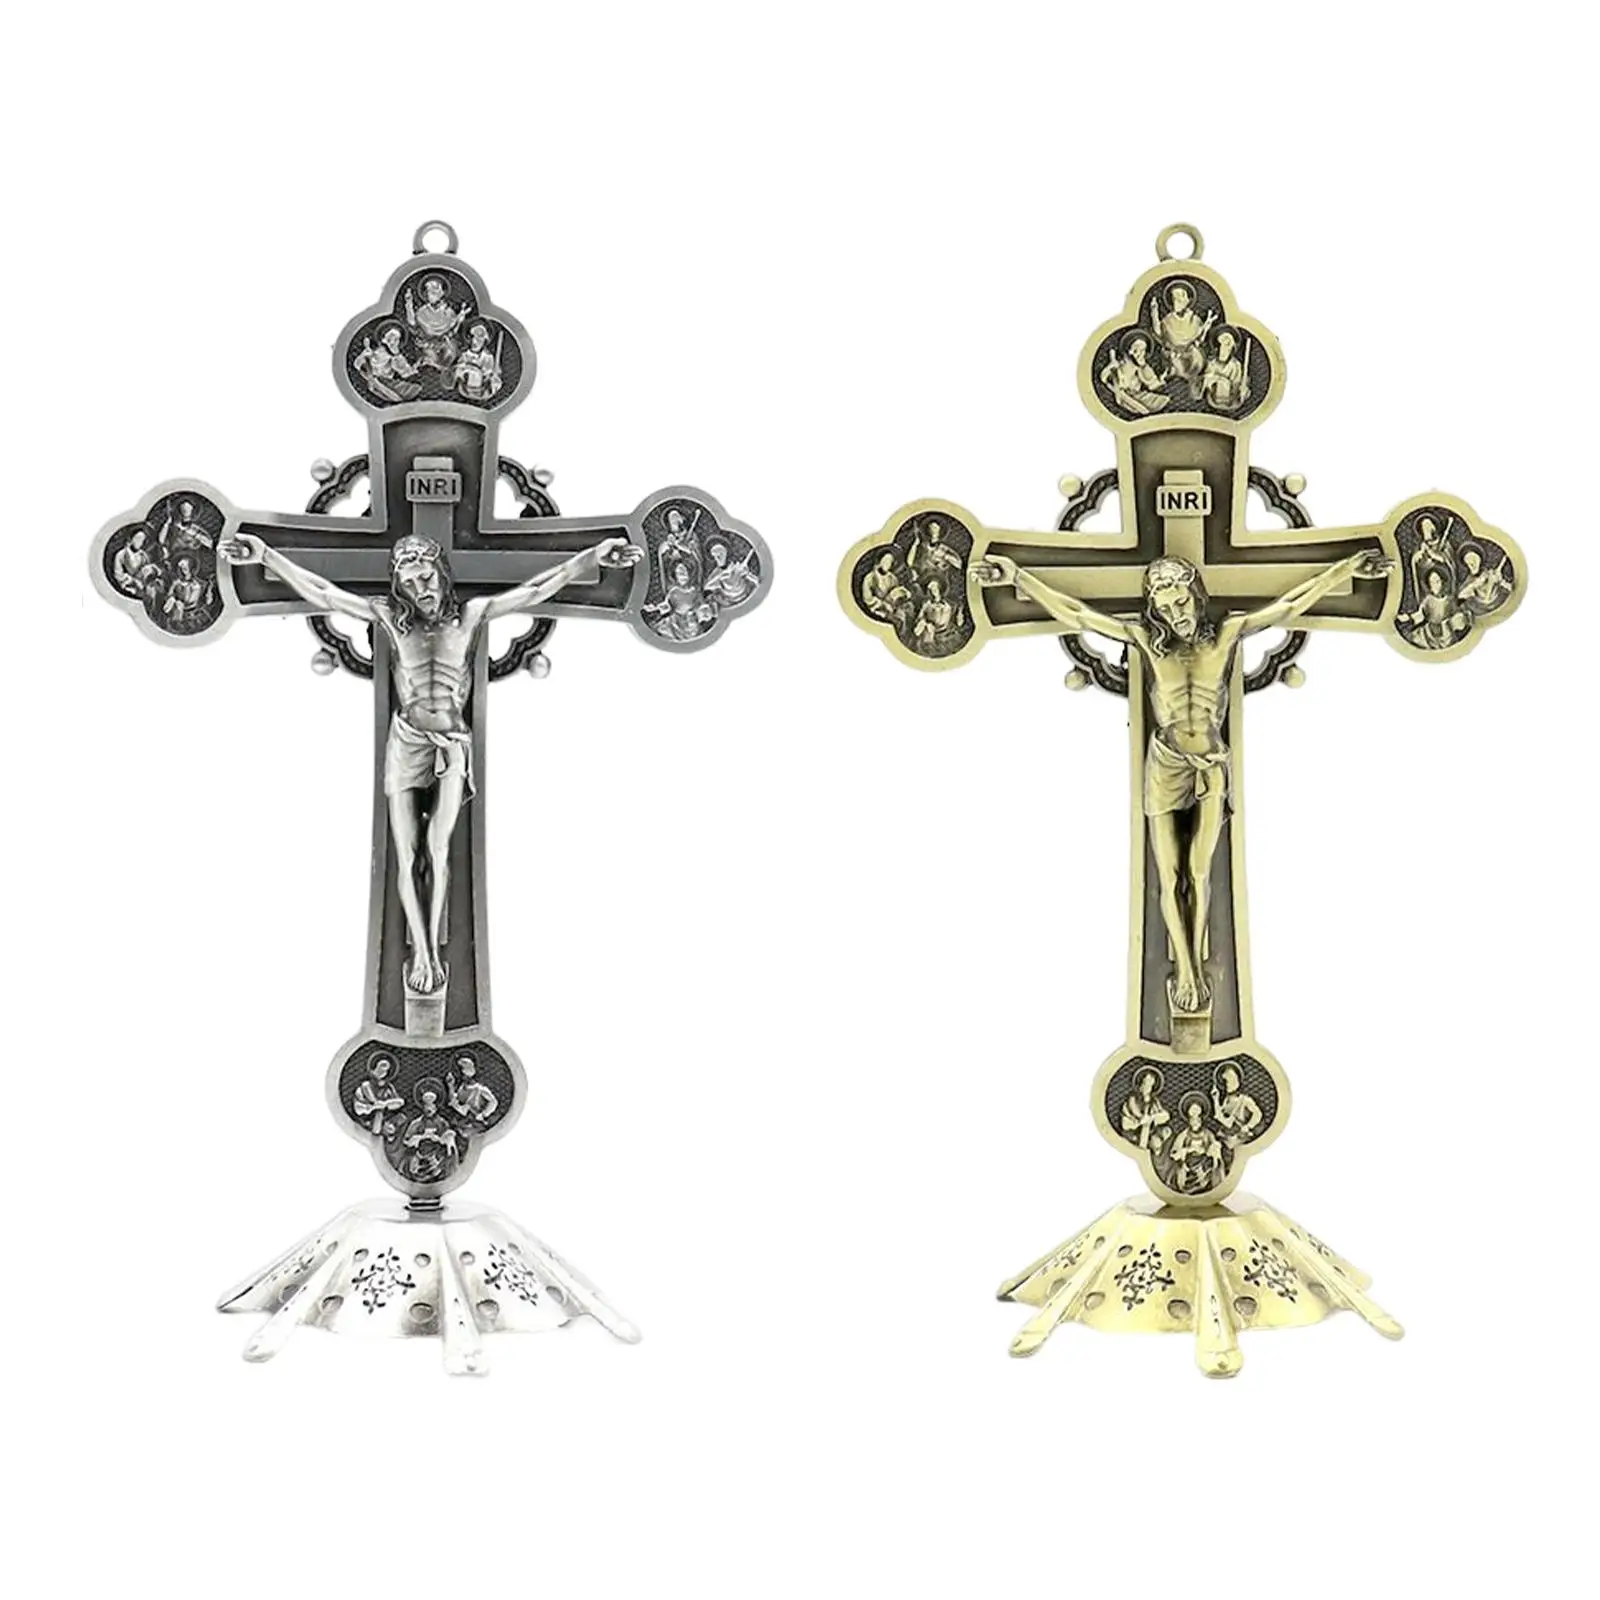 Metal Standing Crucifix , Religious Saint Fireplace Tabletop Decorian  Ornaments Figurines  